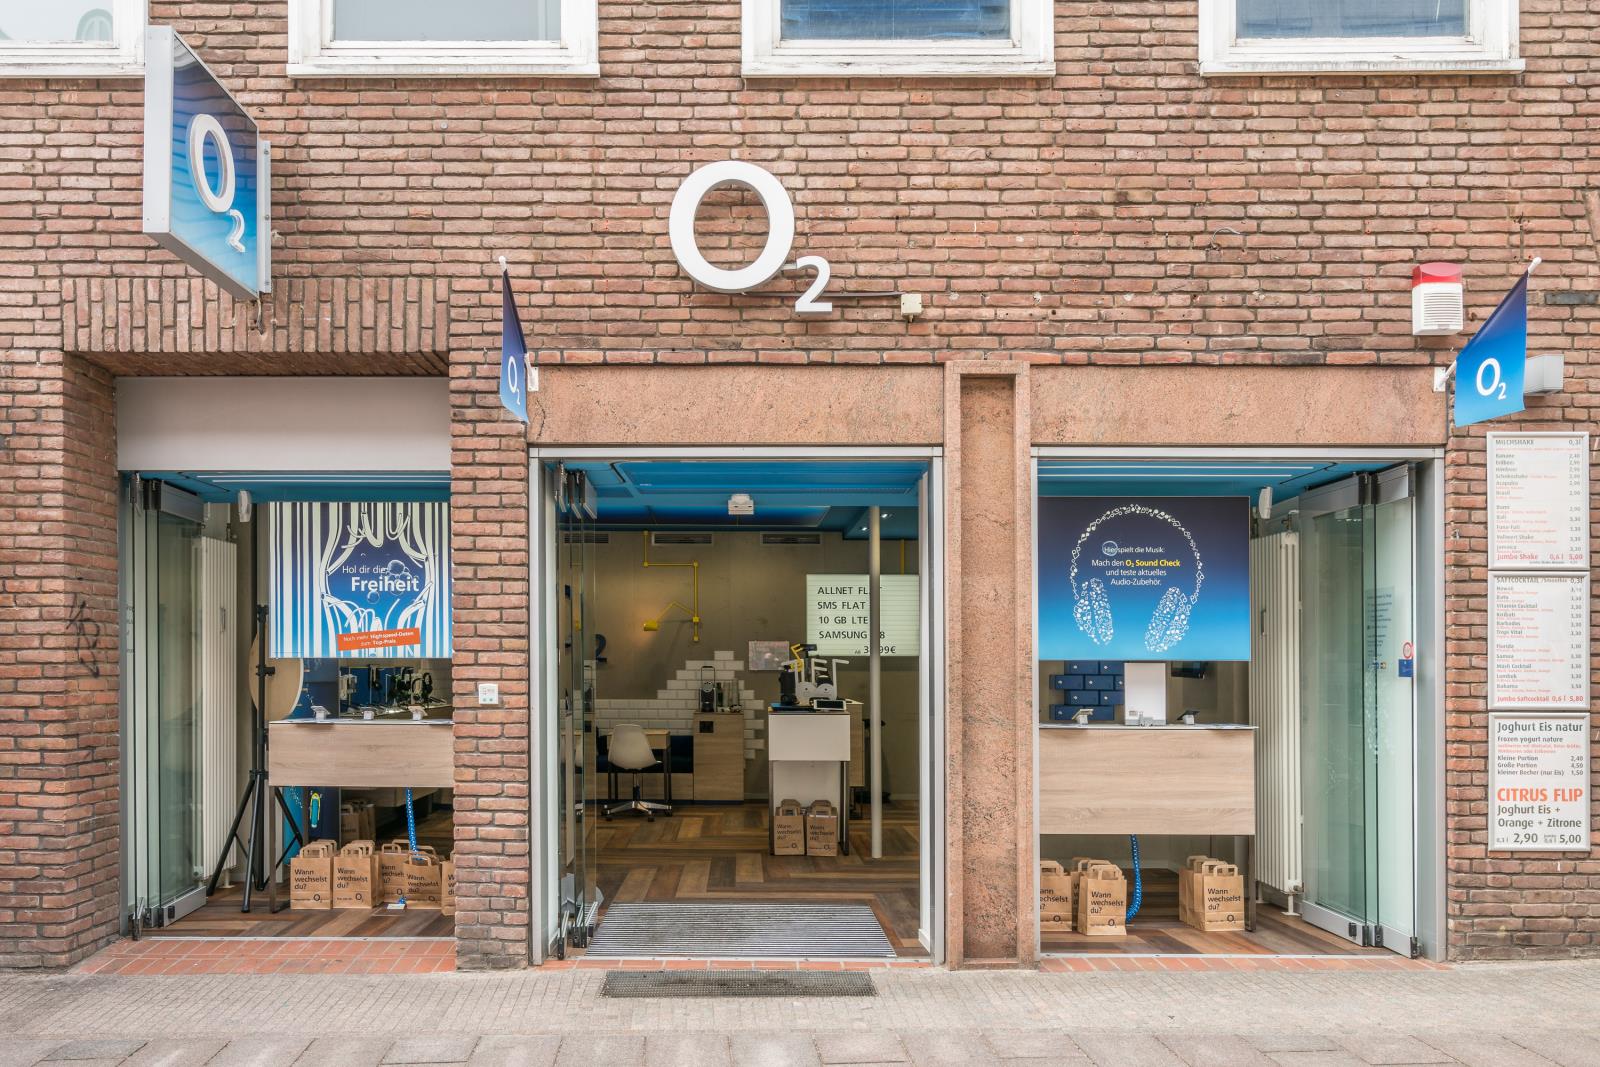 o2 Shop, Breite Straße 66 in Lübeck